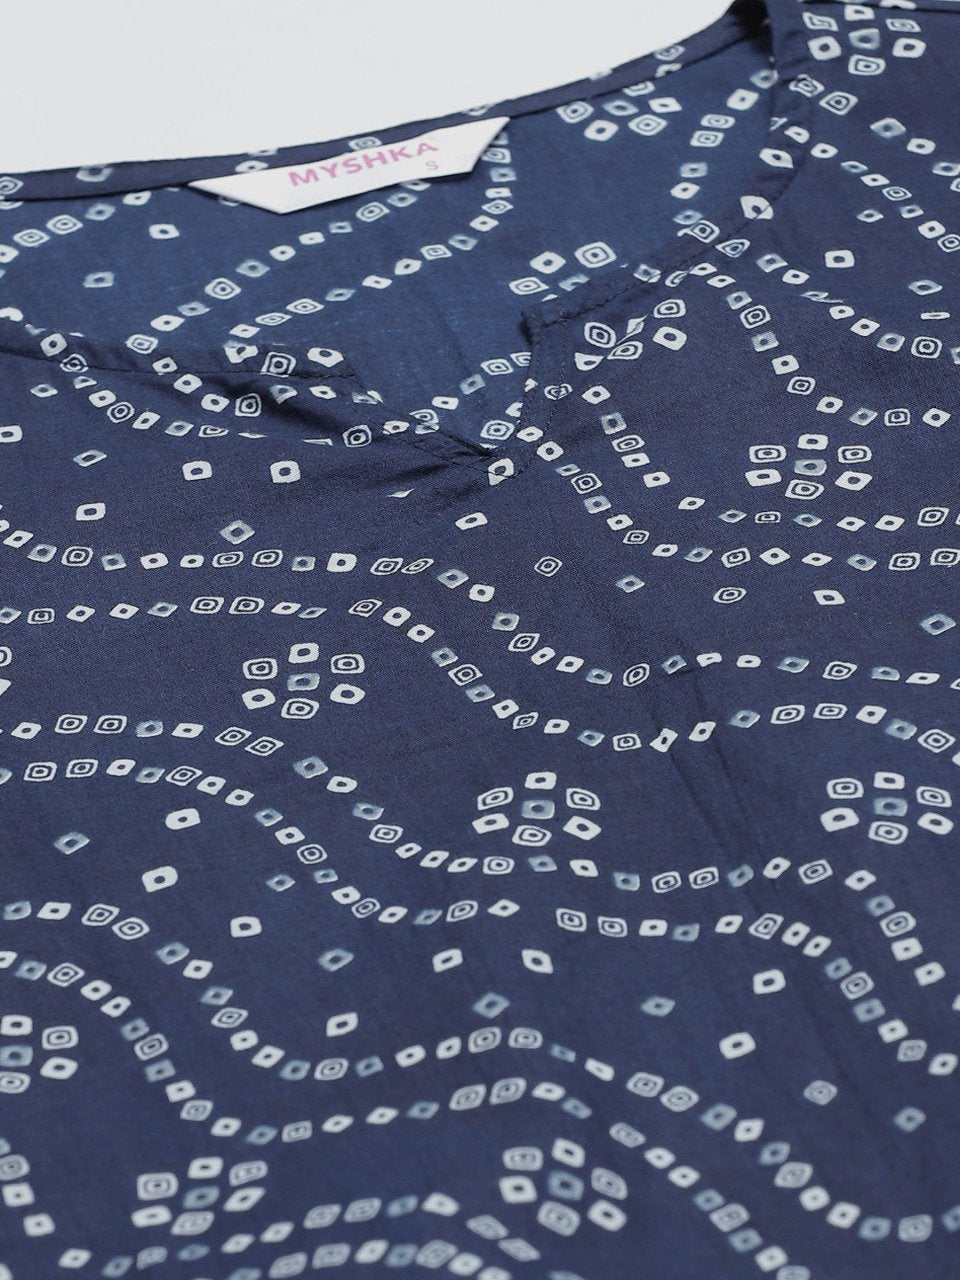 Women's Navy Blue Cotton Printed 3/4 Sleeve Round Neck Casual Dress - Myshka